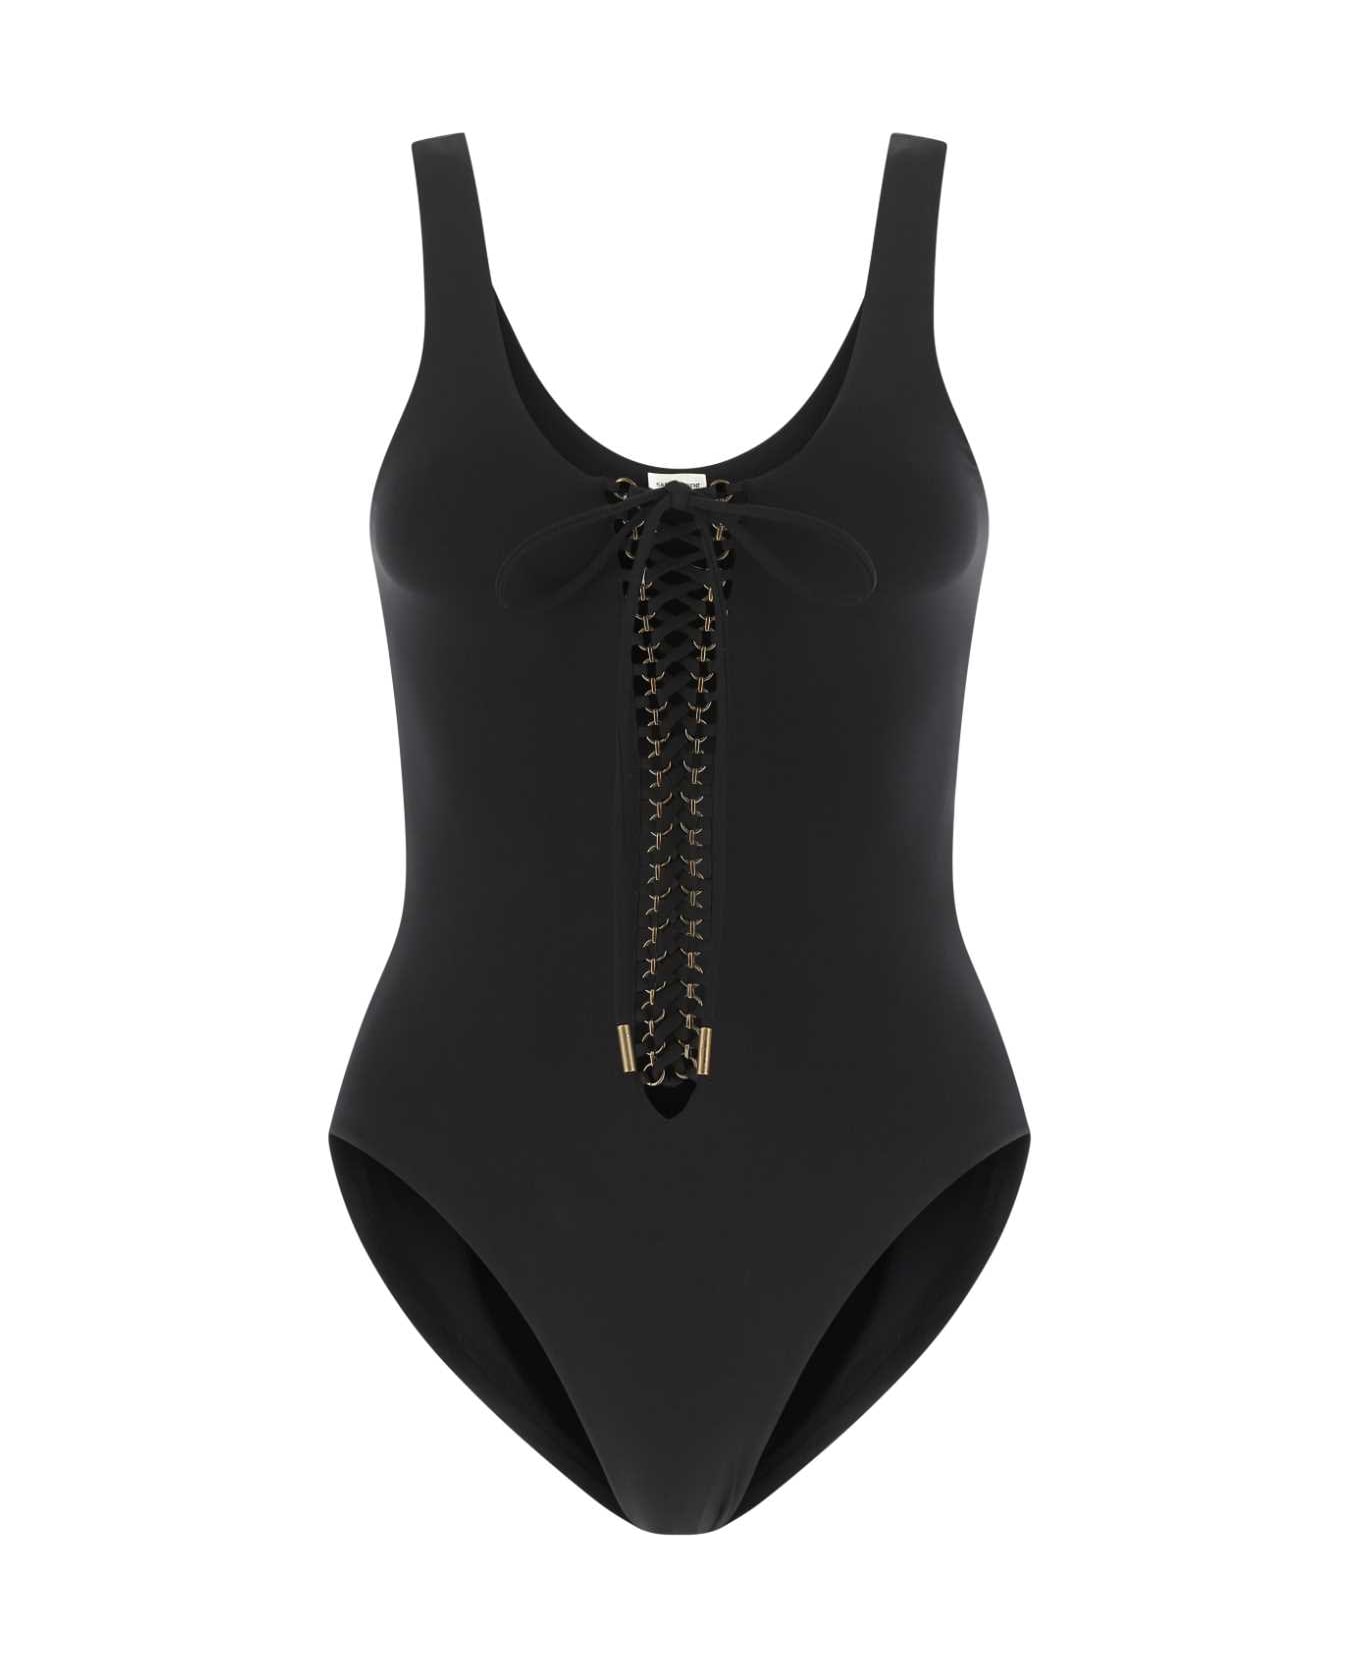 Saint Laurent Black Stretch Nylon Swimsuit - 1000 水着